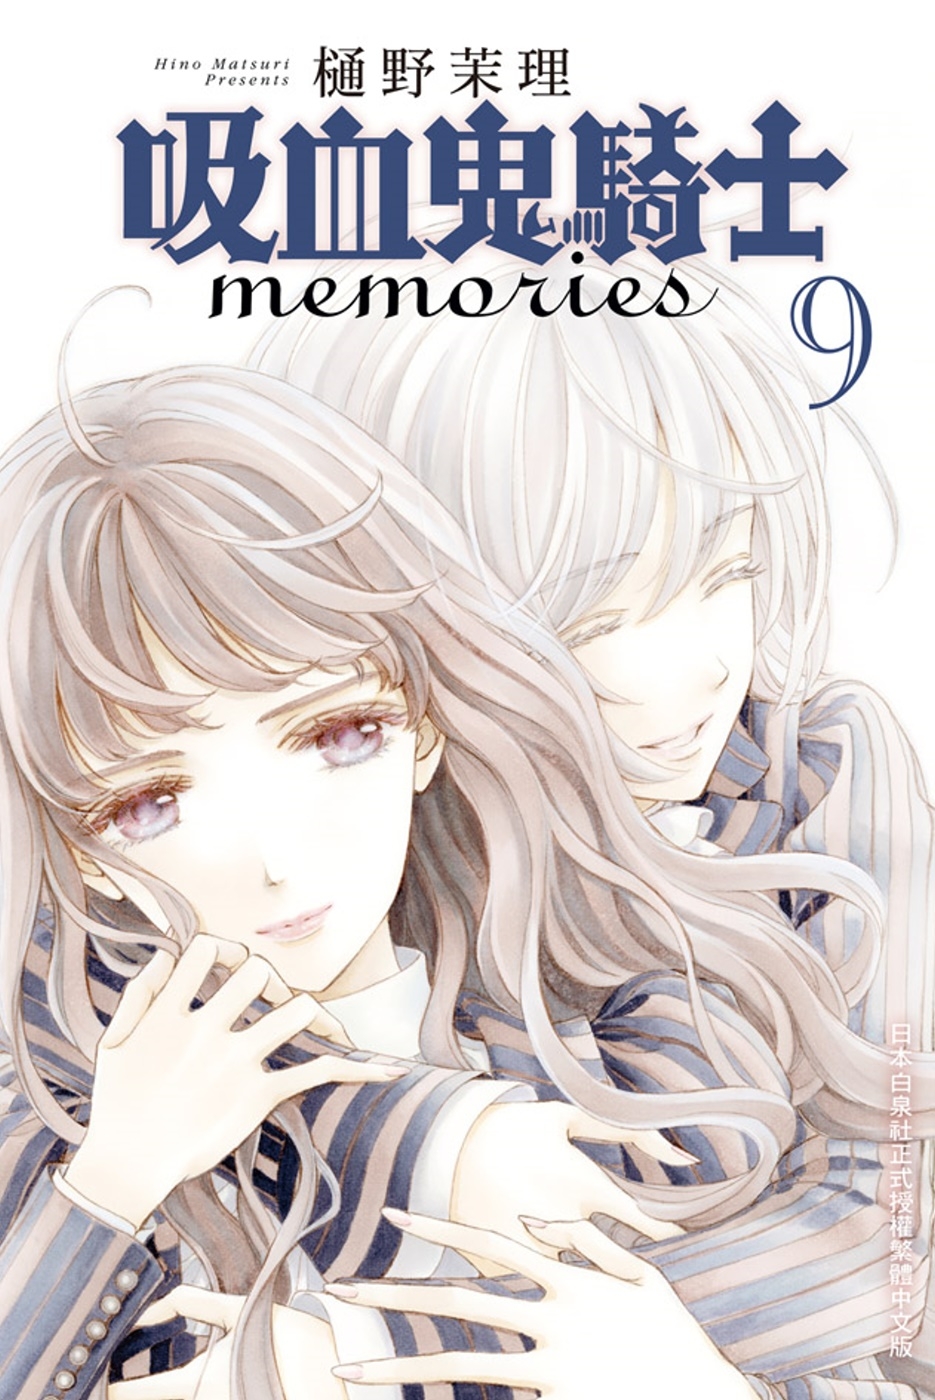 吸血鬼騎士 memories 9